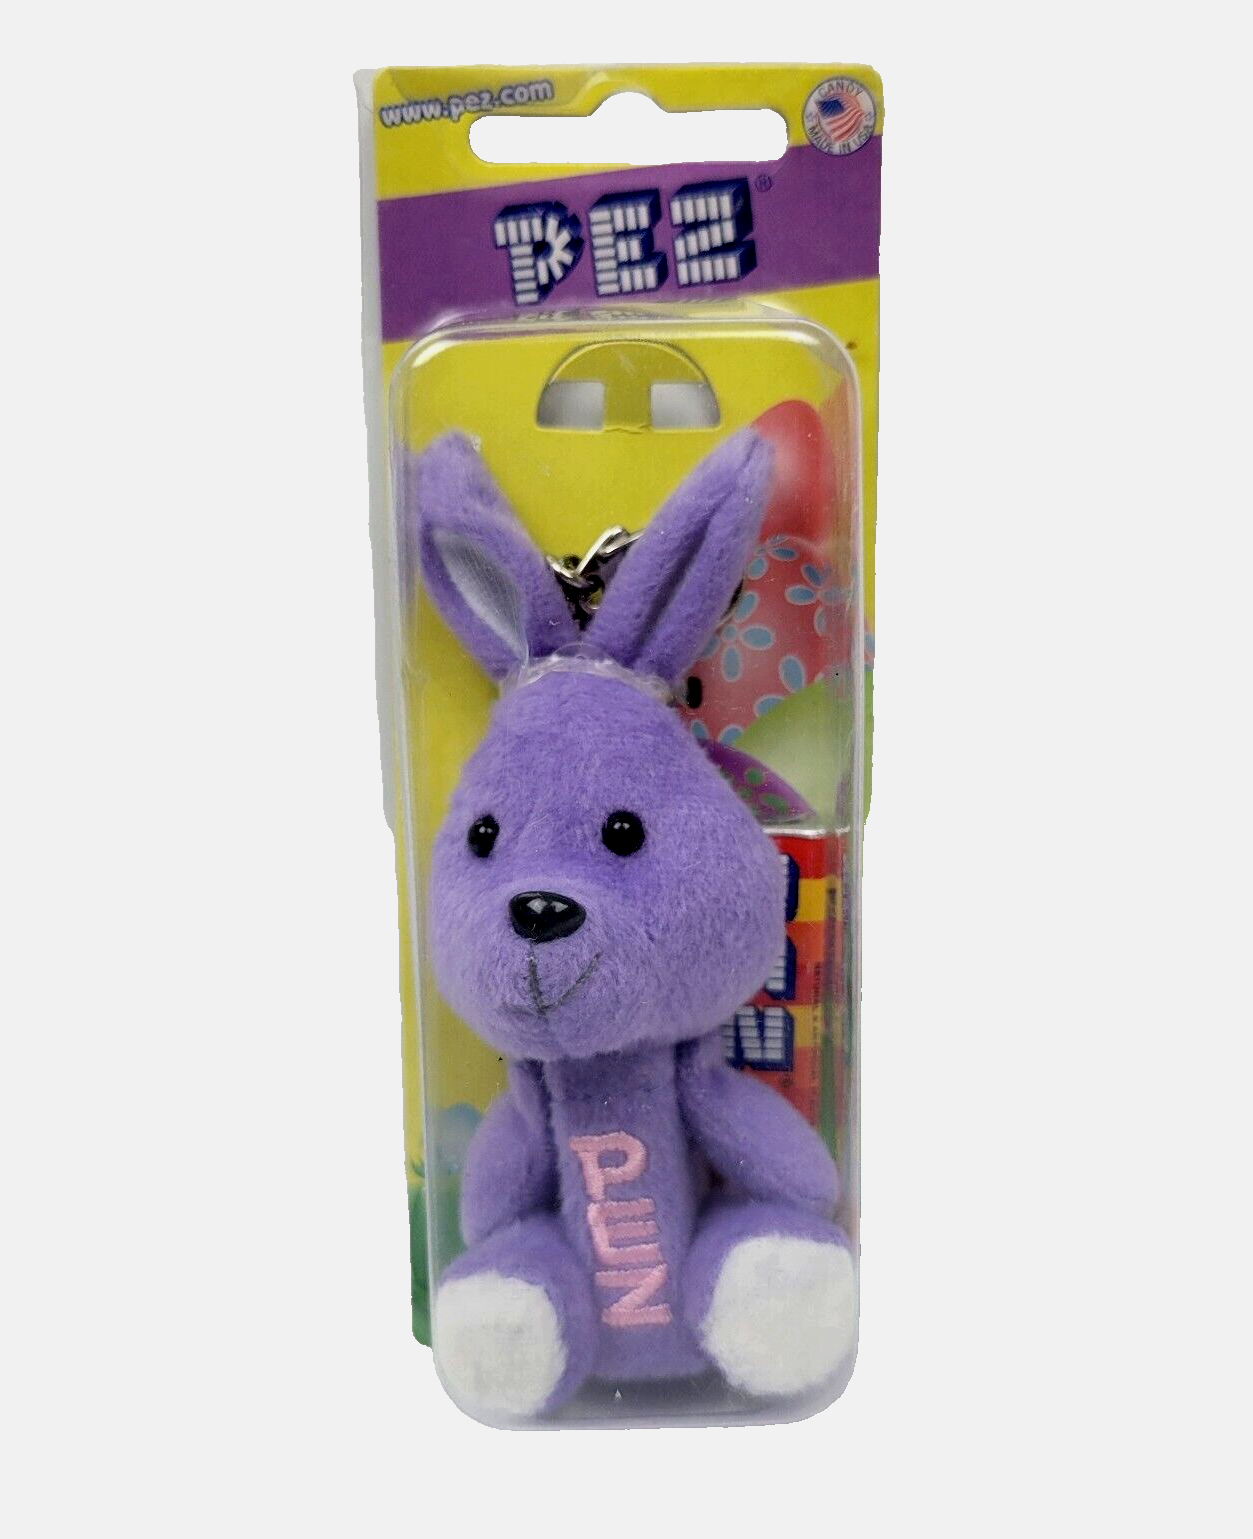 PEZ Purple Easter Bunny Plush PEZ Dispenser Keychain Candy 2012 NEW - $4.99